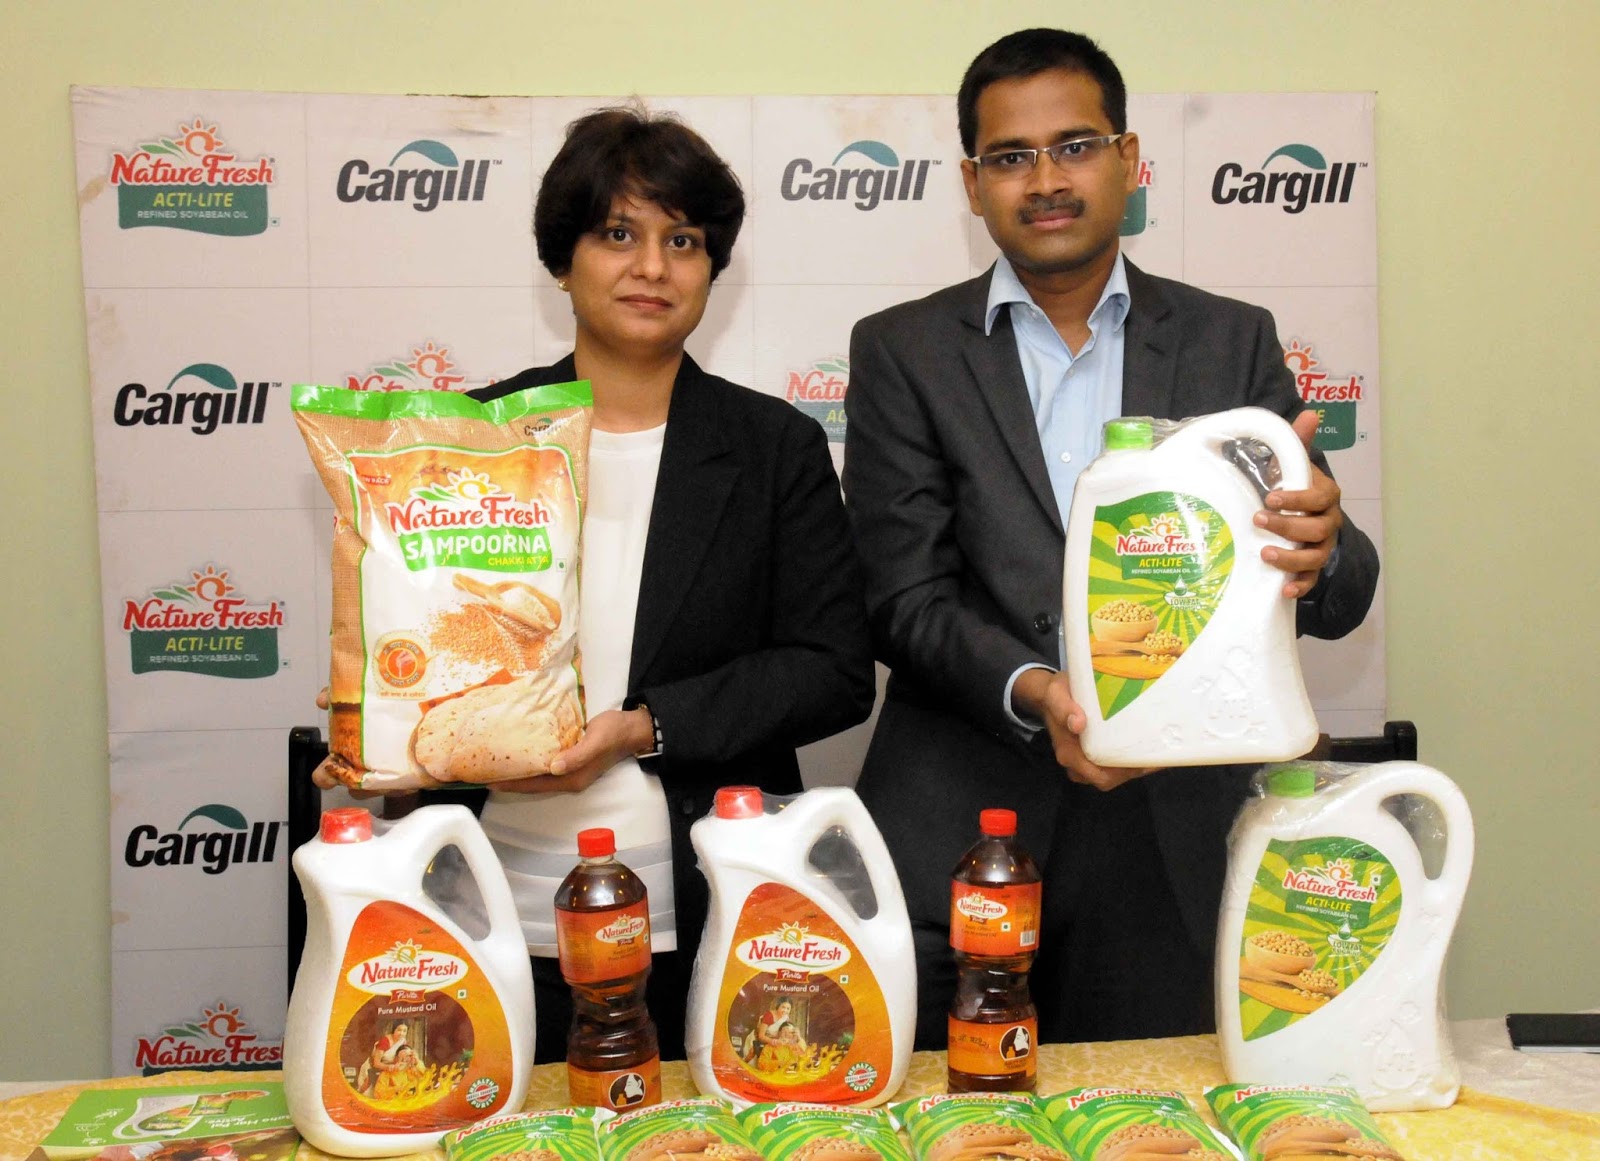 Ооо каргилл. Cargill продукция. Cargill продукты. Cargill в России. Cargill масло.